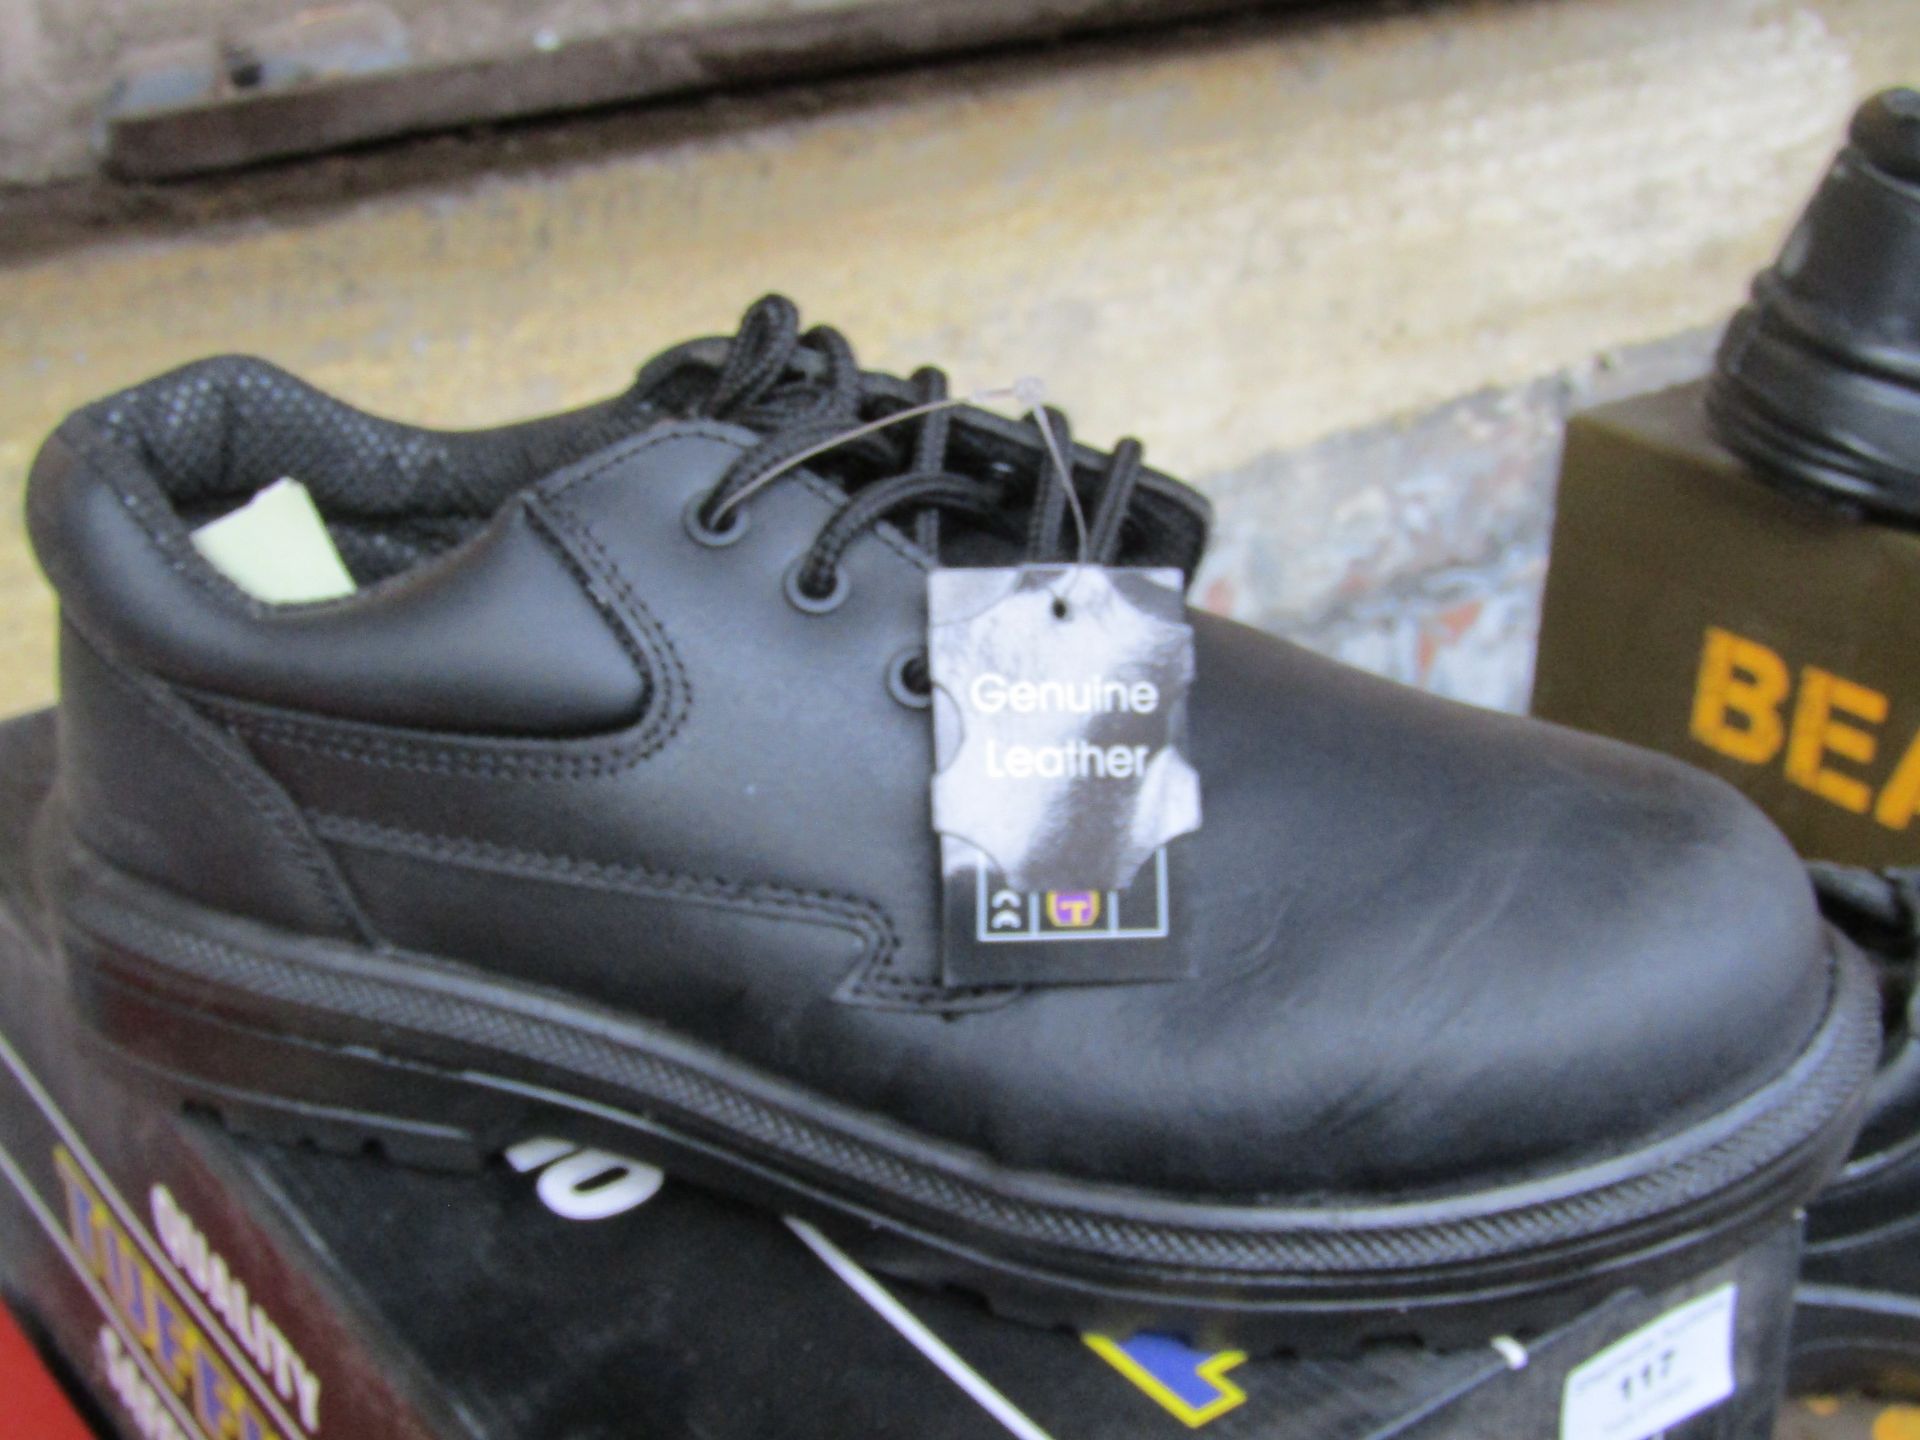 tuffking genuine leather safety shoe new, boxed size 8